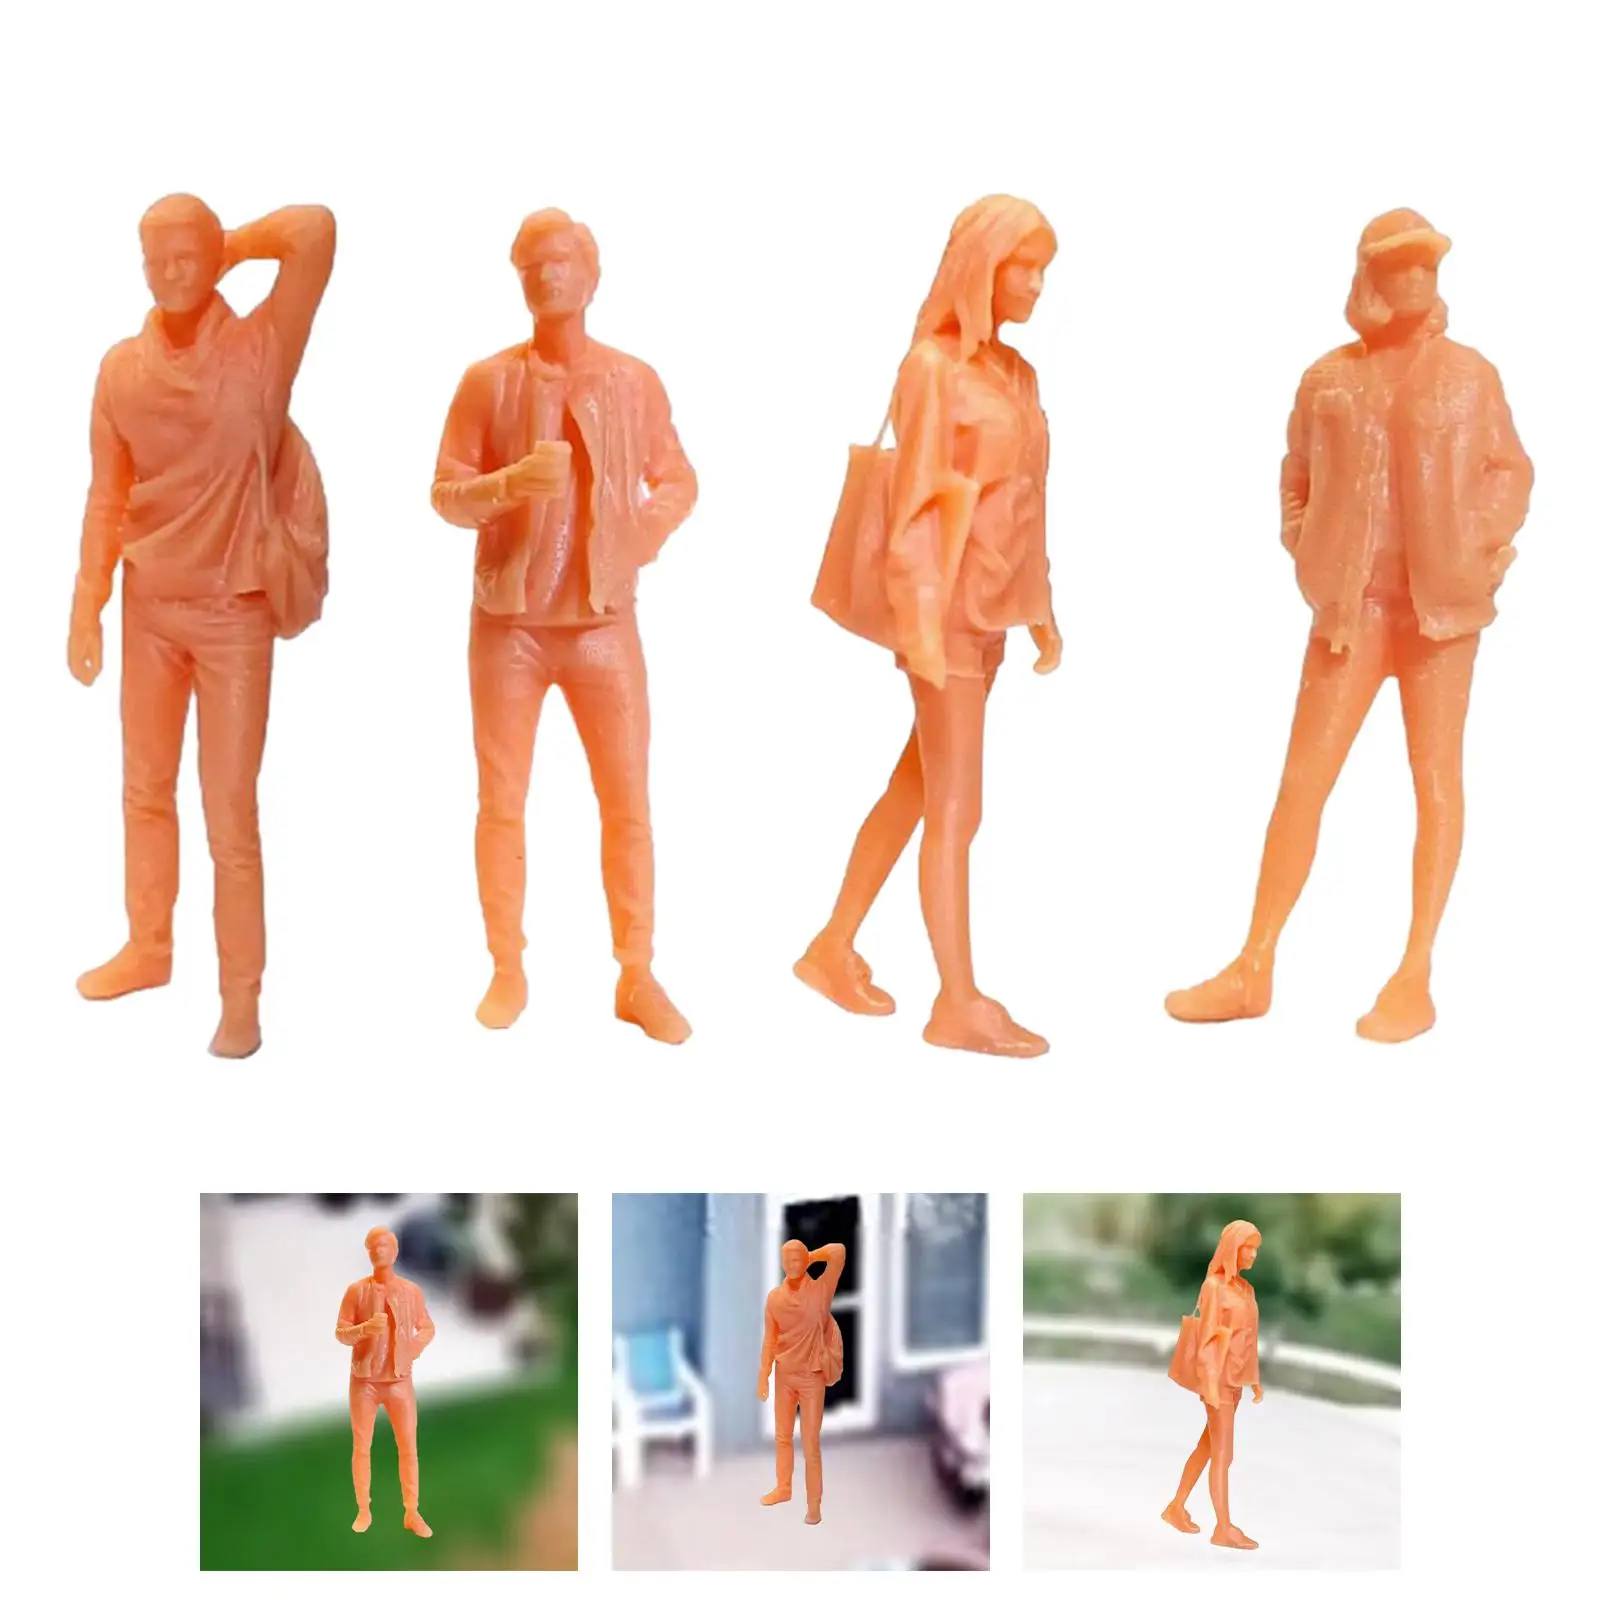 1/64 Scale Diorama Figure Collection Landscape Model Trains Desktop Ornament Handmade Diorama Action Figurines Decoration